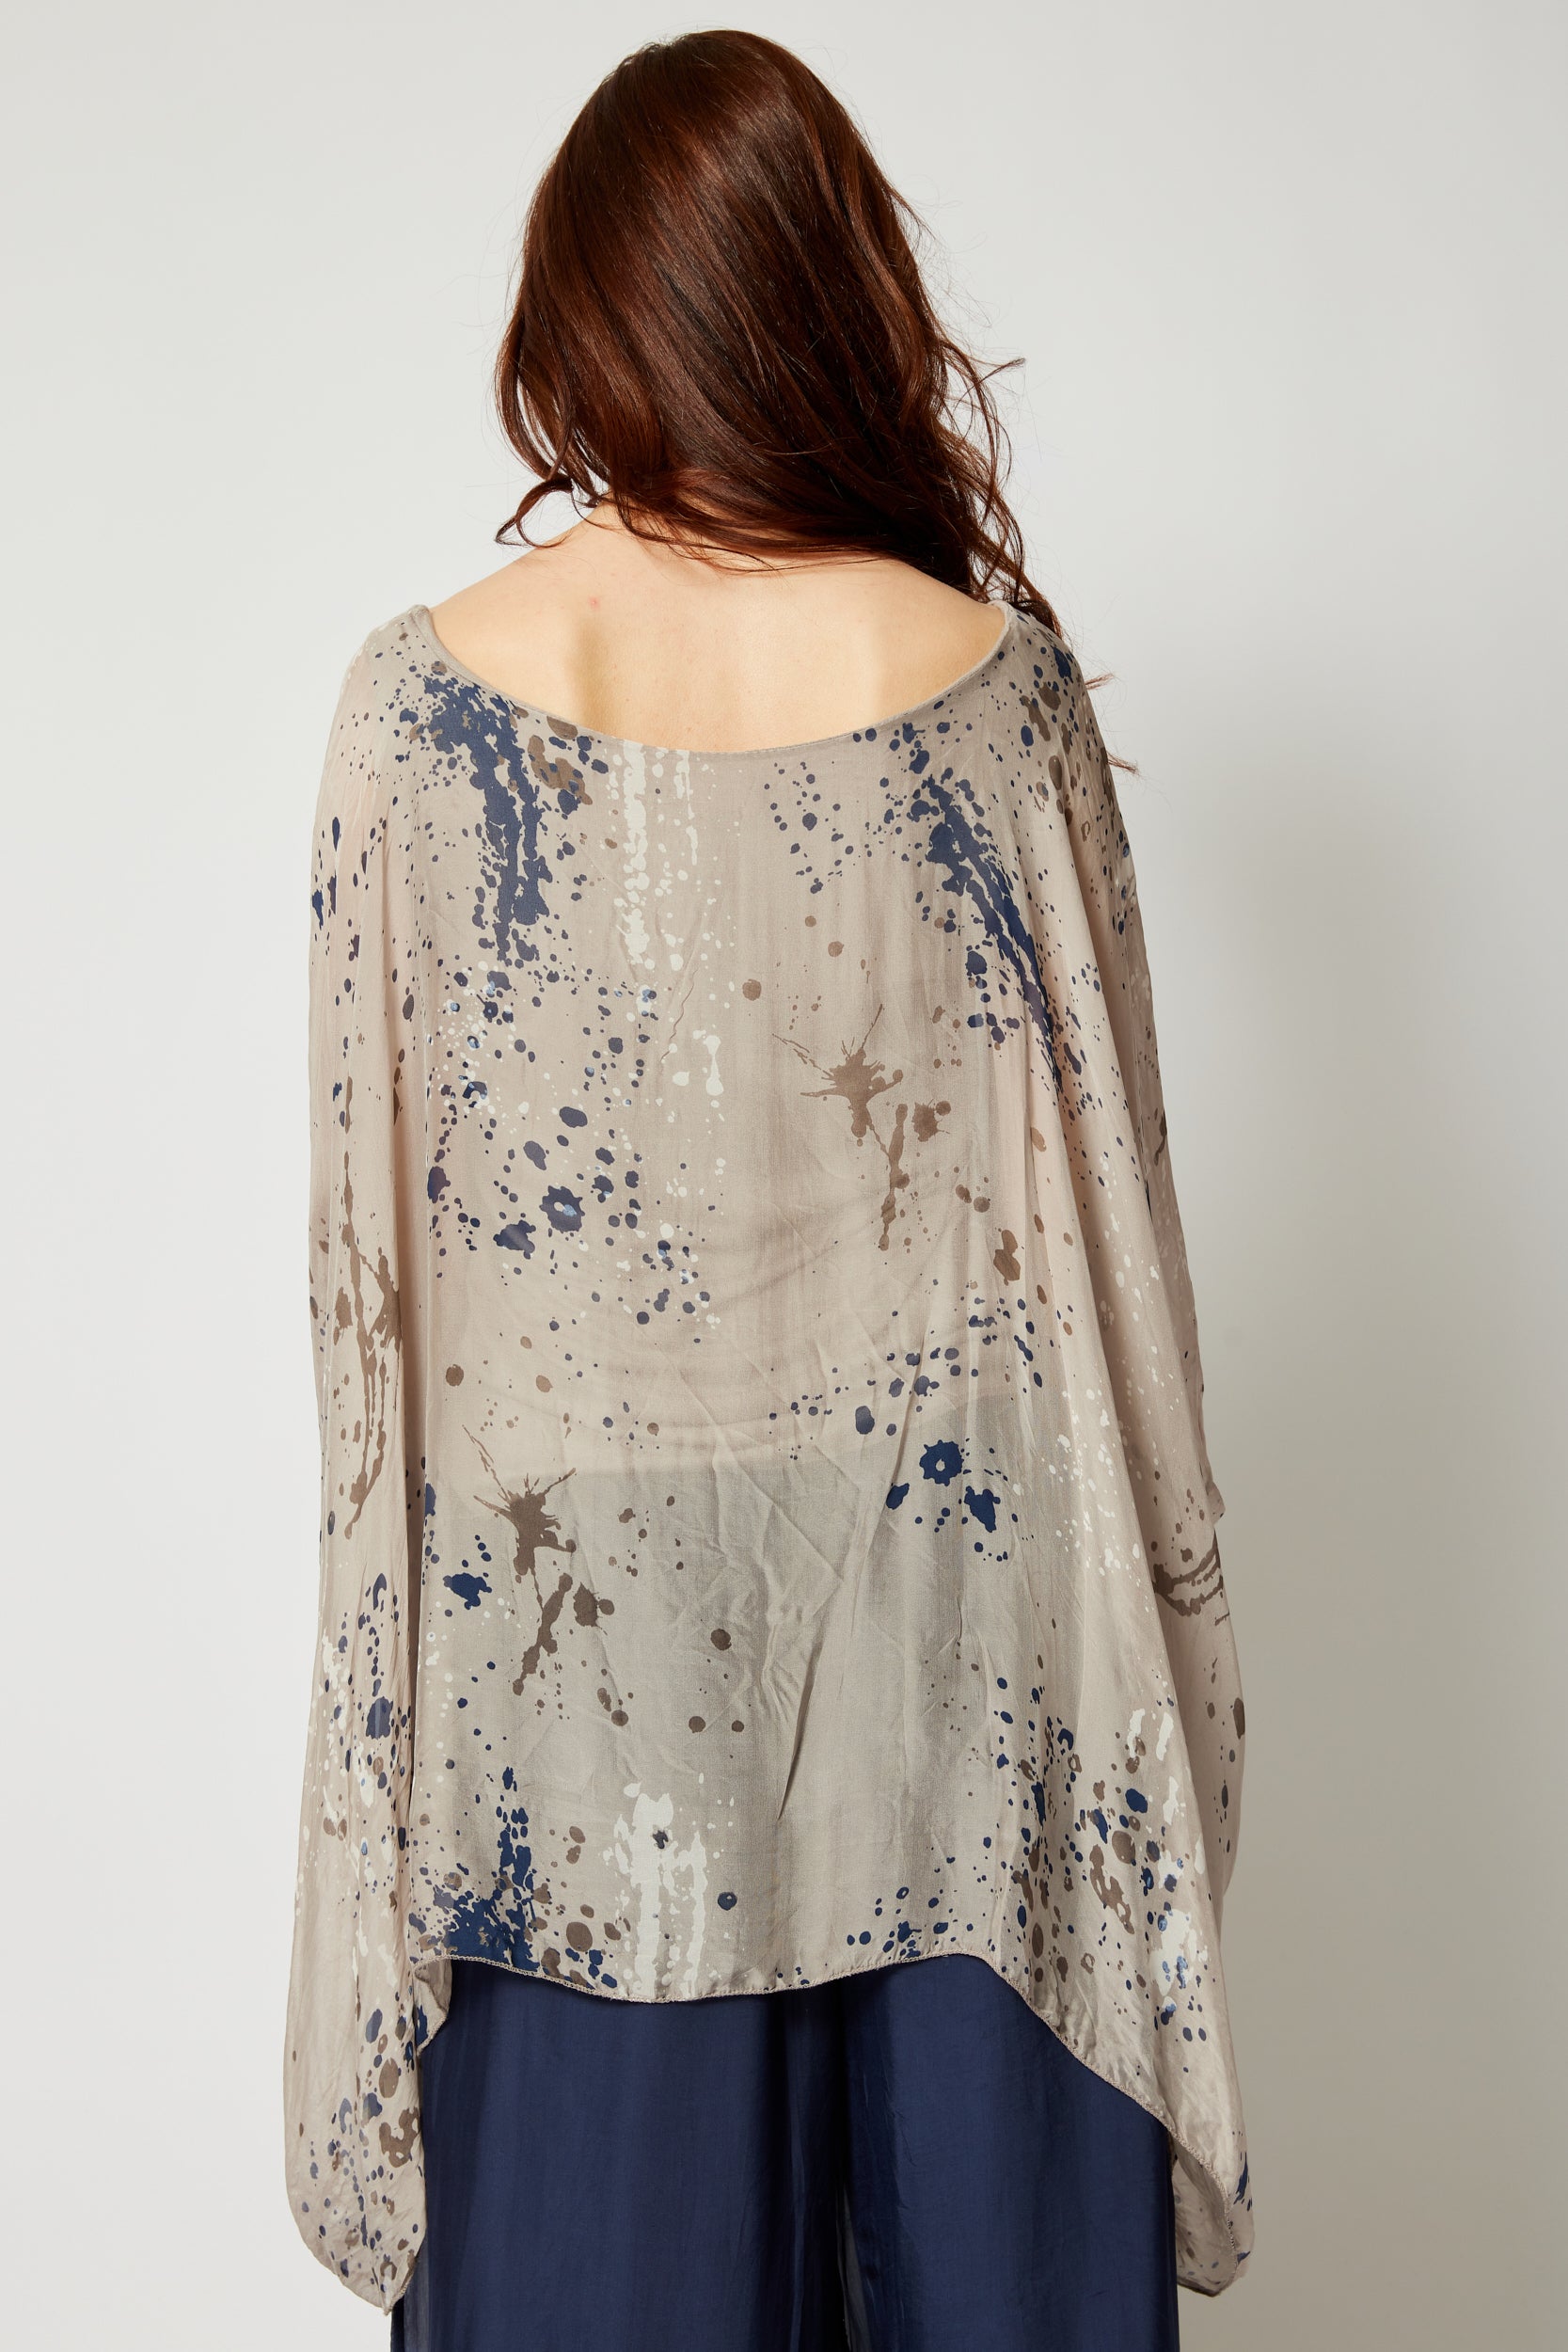 Italian Silk Flowing Splatter Top - Jacqueline B Clothing